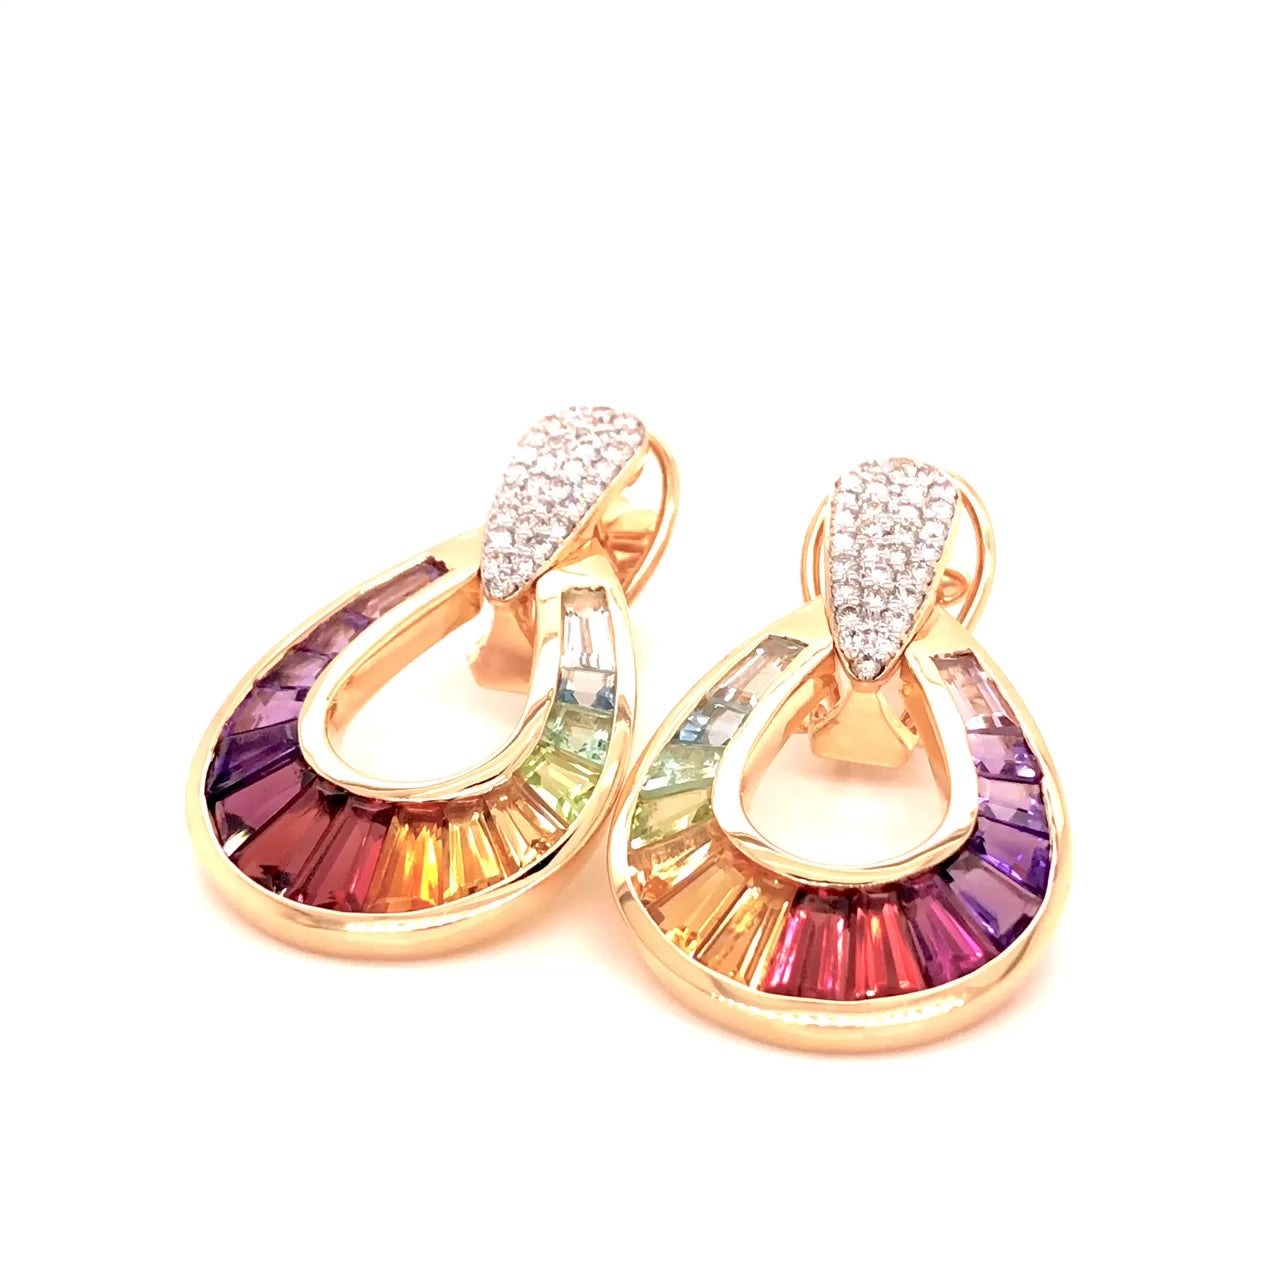 Buy 18K gold multicolor baguette earrings online